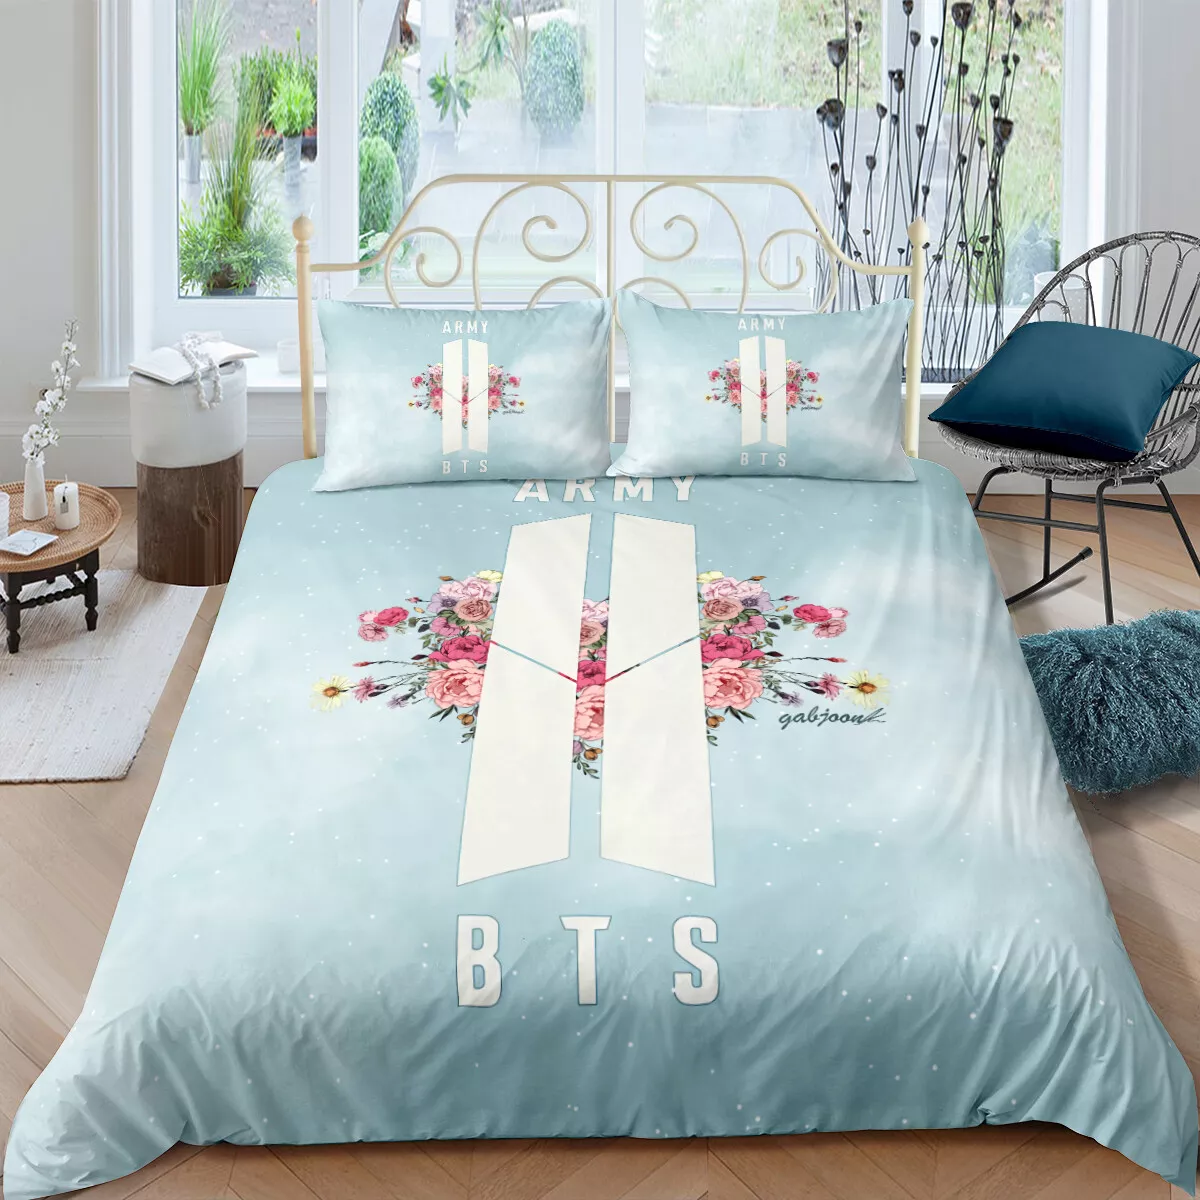 3D Love BTS Bangtan Bedding Set Duvet Cover Pillow Case | eBay